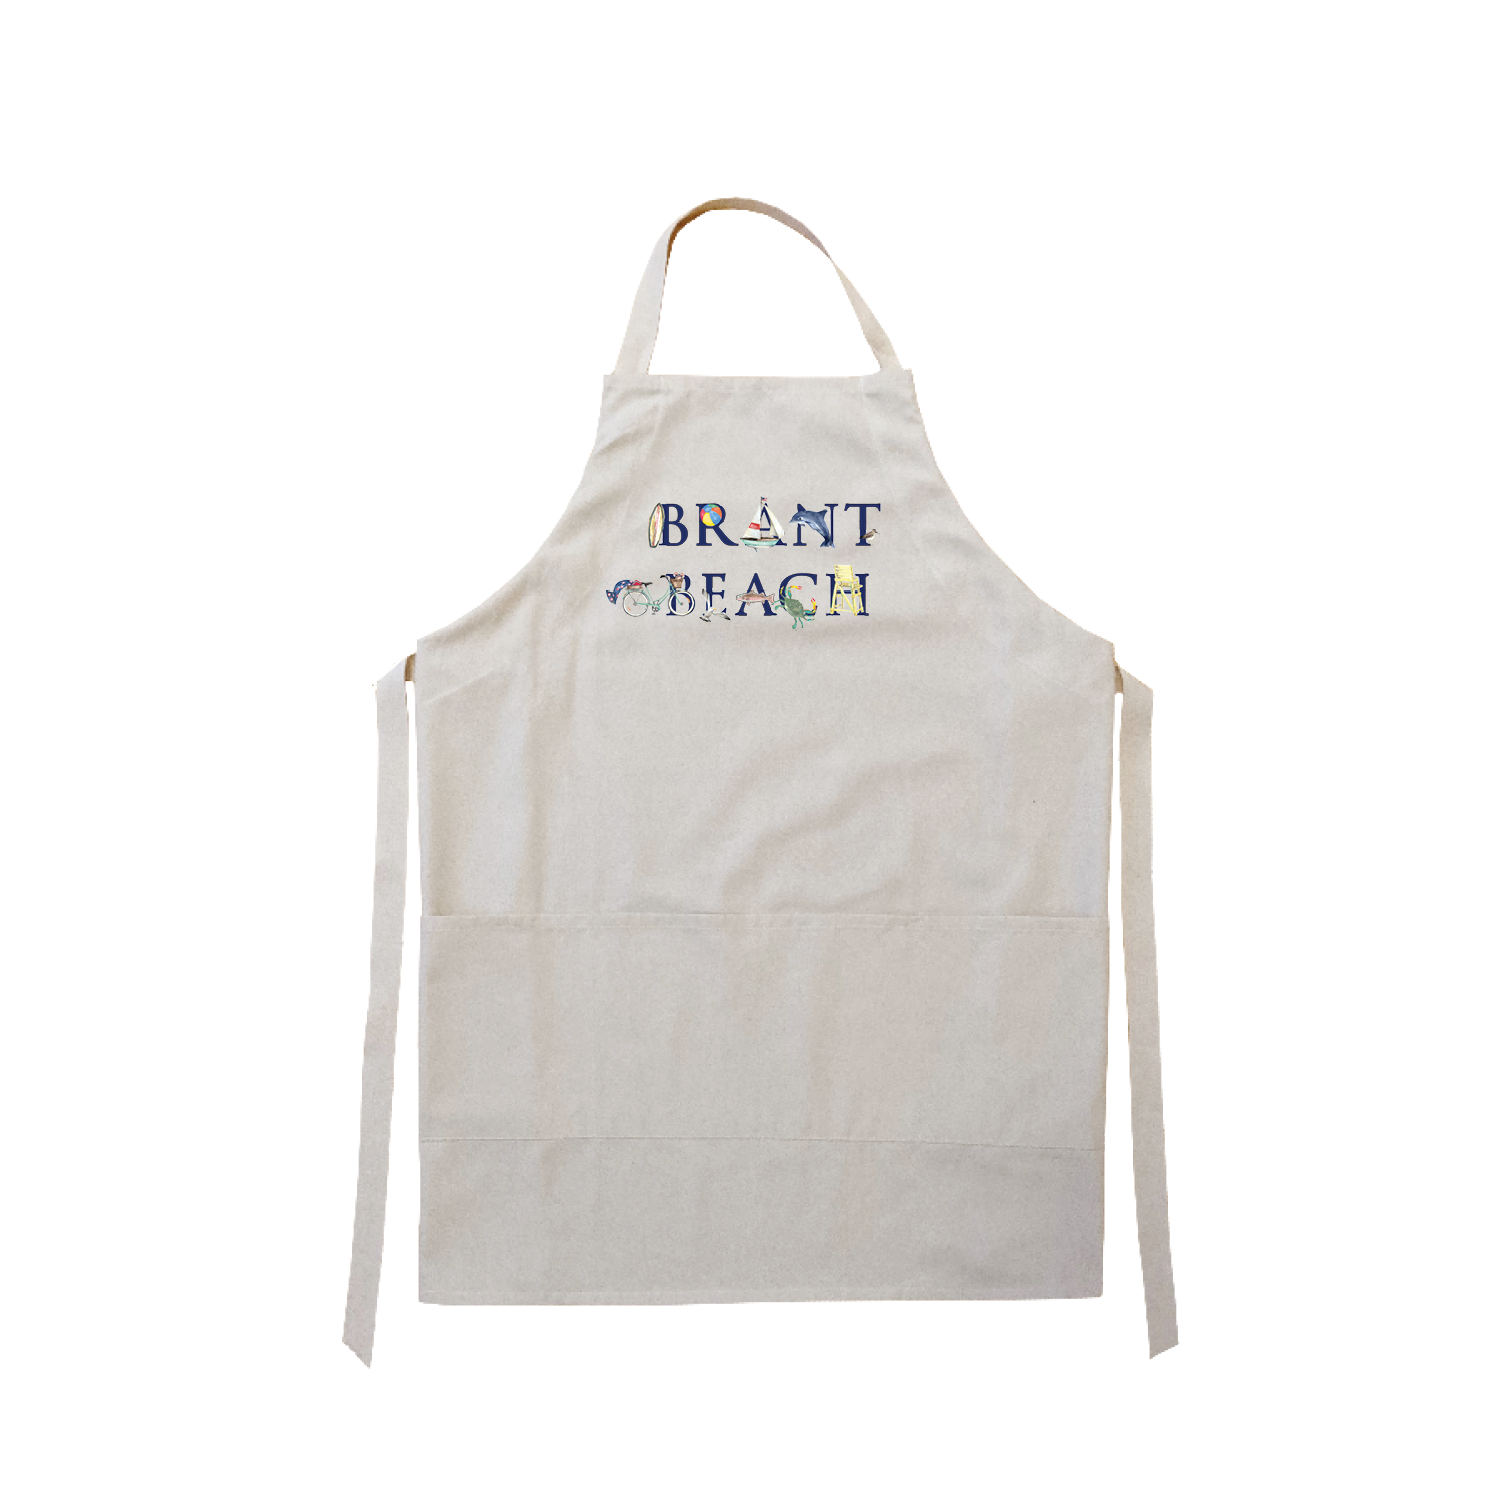 Brant Beach apron